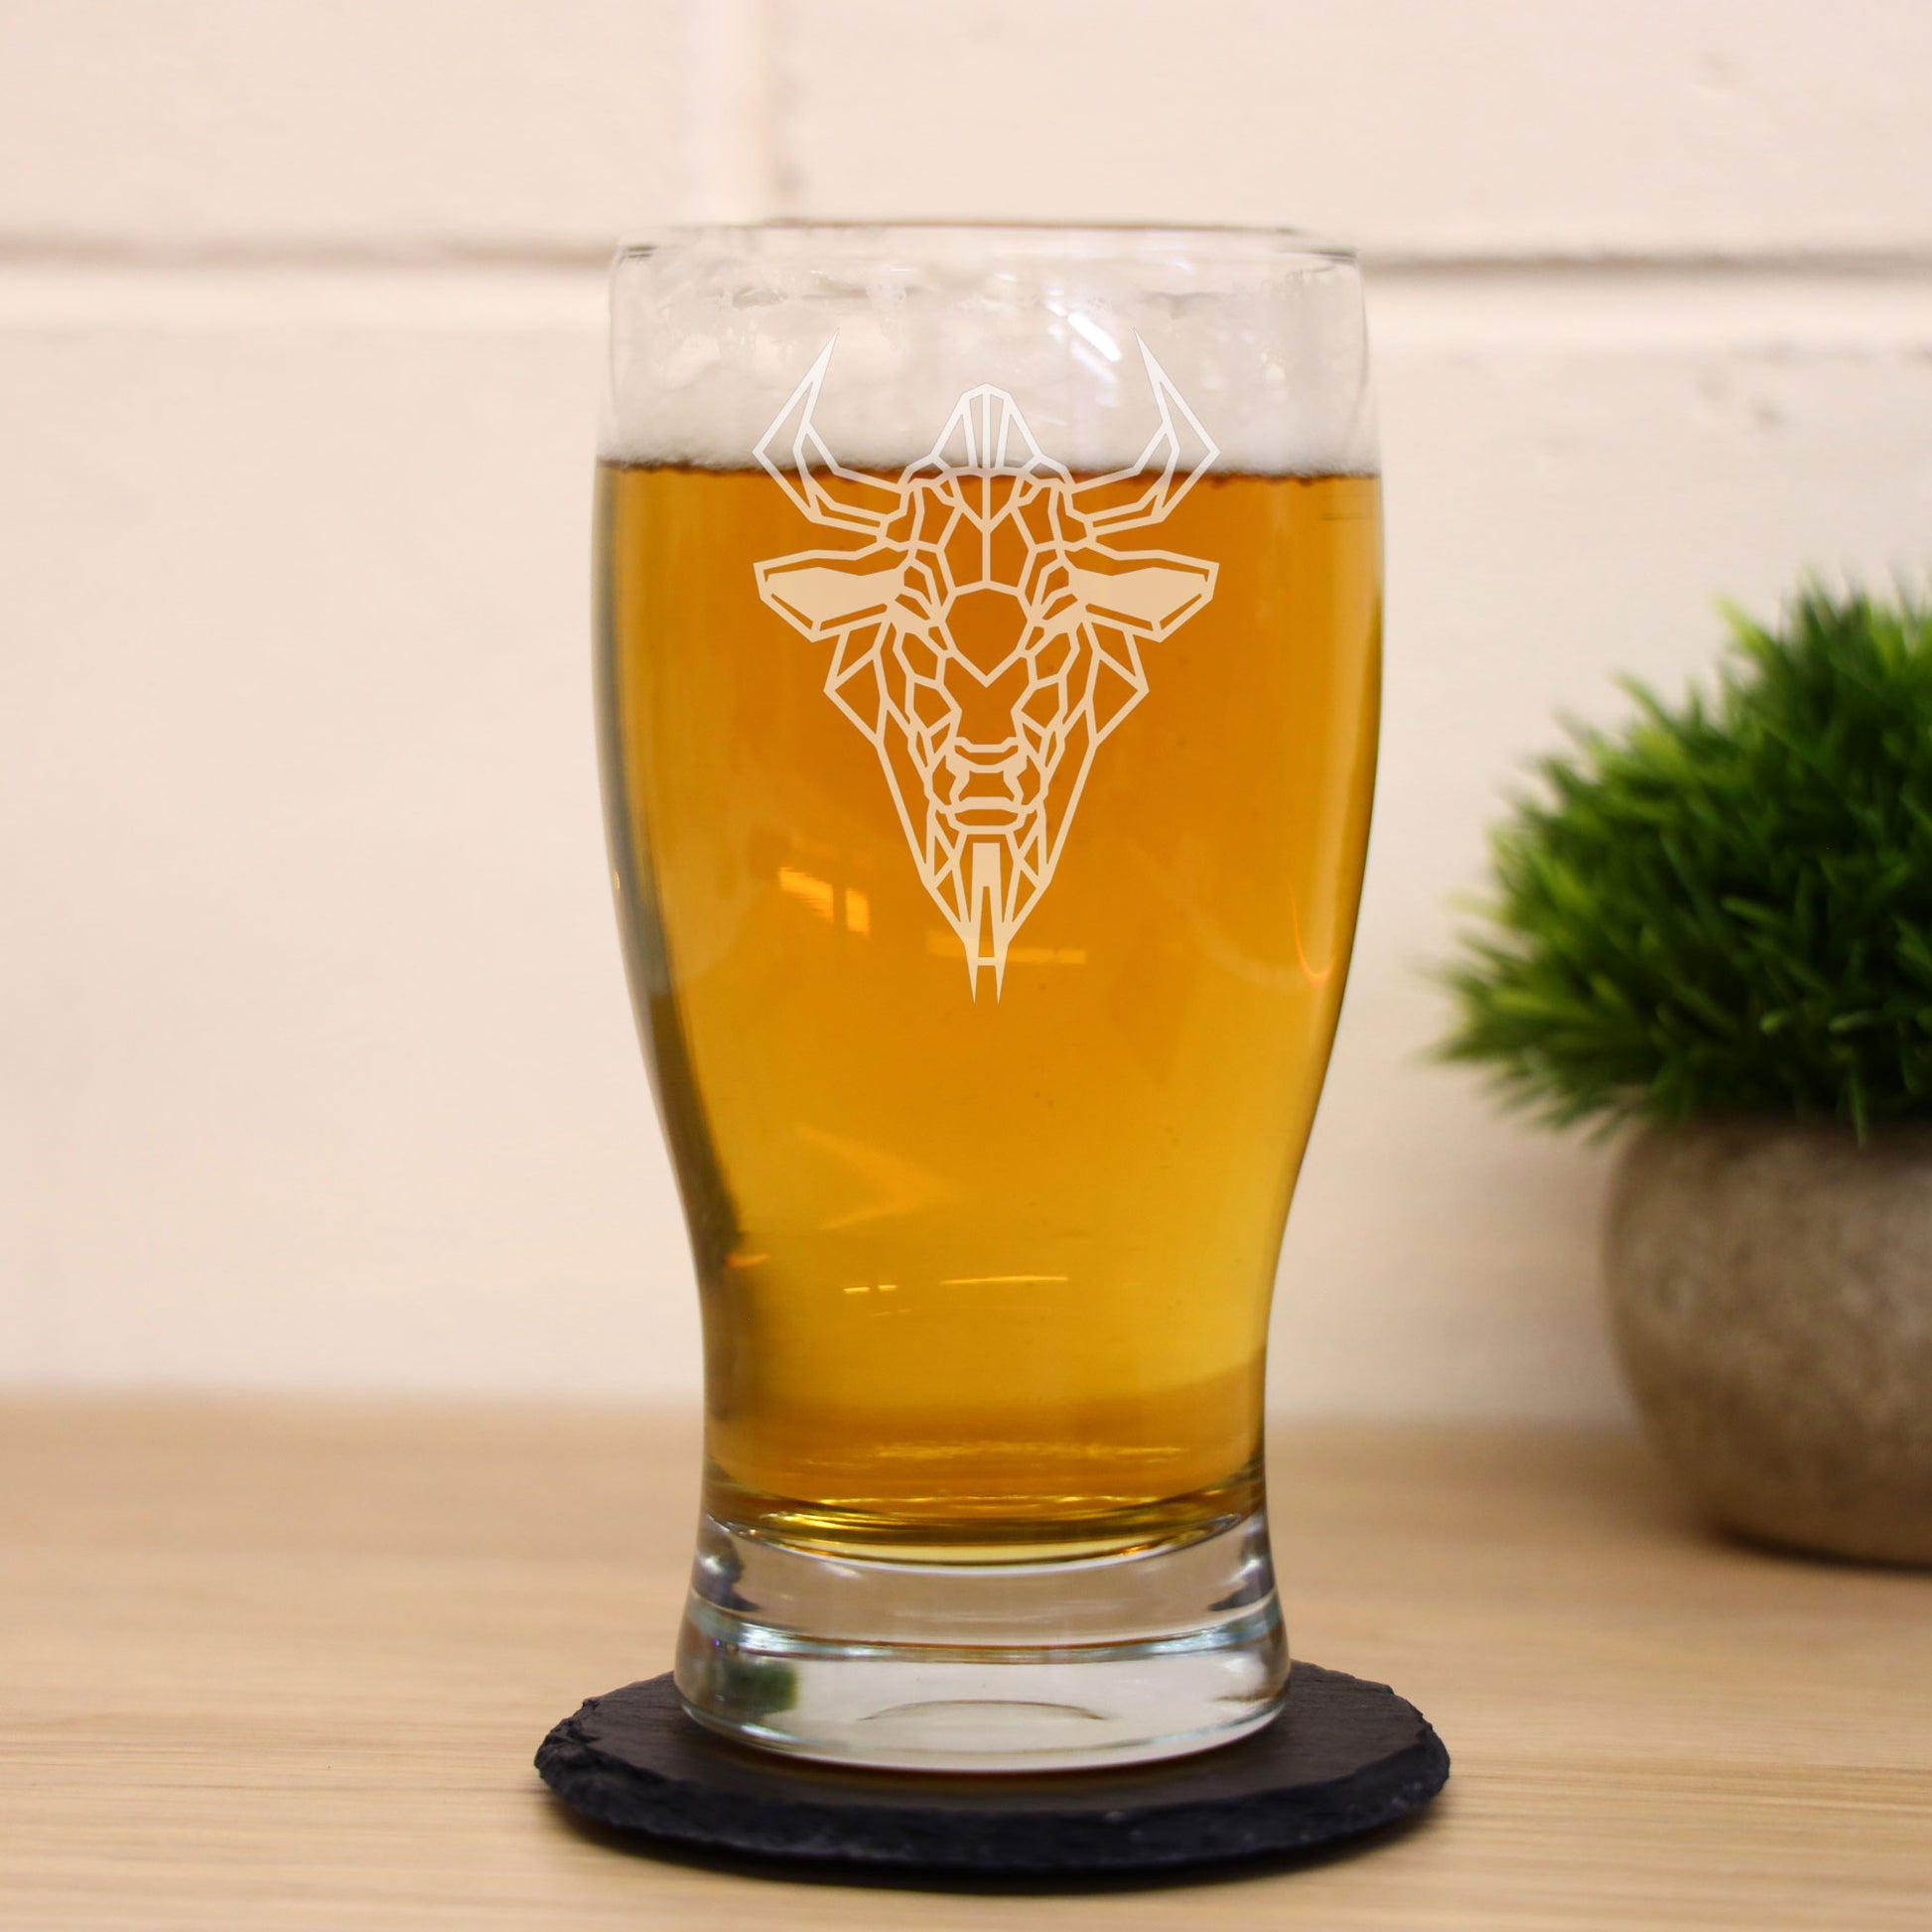 Buffalo Engraved Beer Pint Glass  - Always Looking Good -   